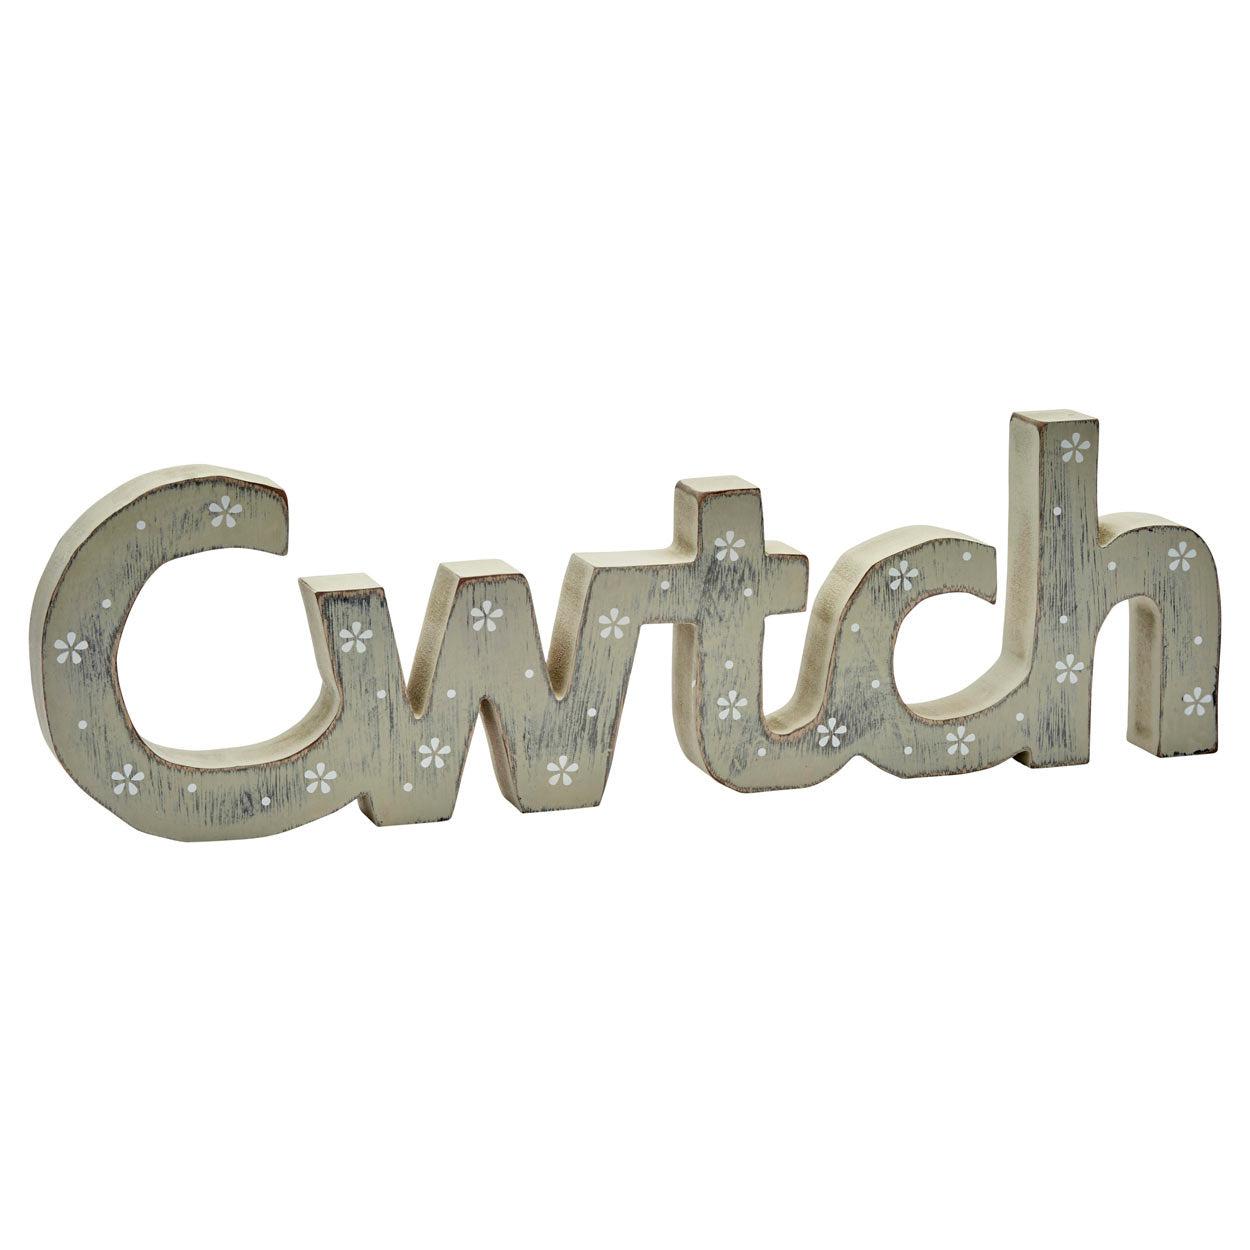 Decoration - Wooden Word - Cwtch / Cuddle